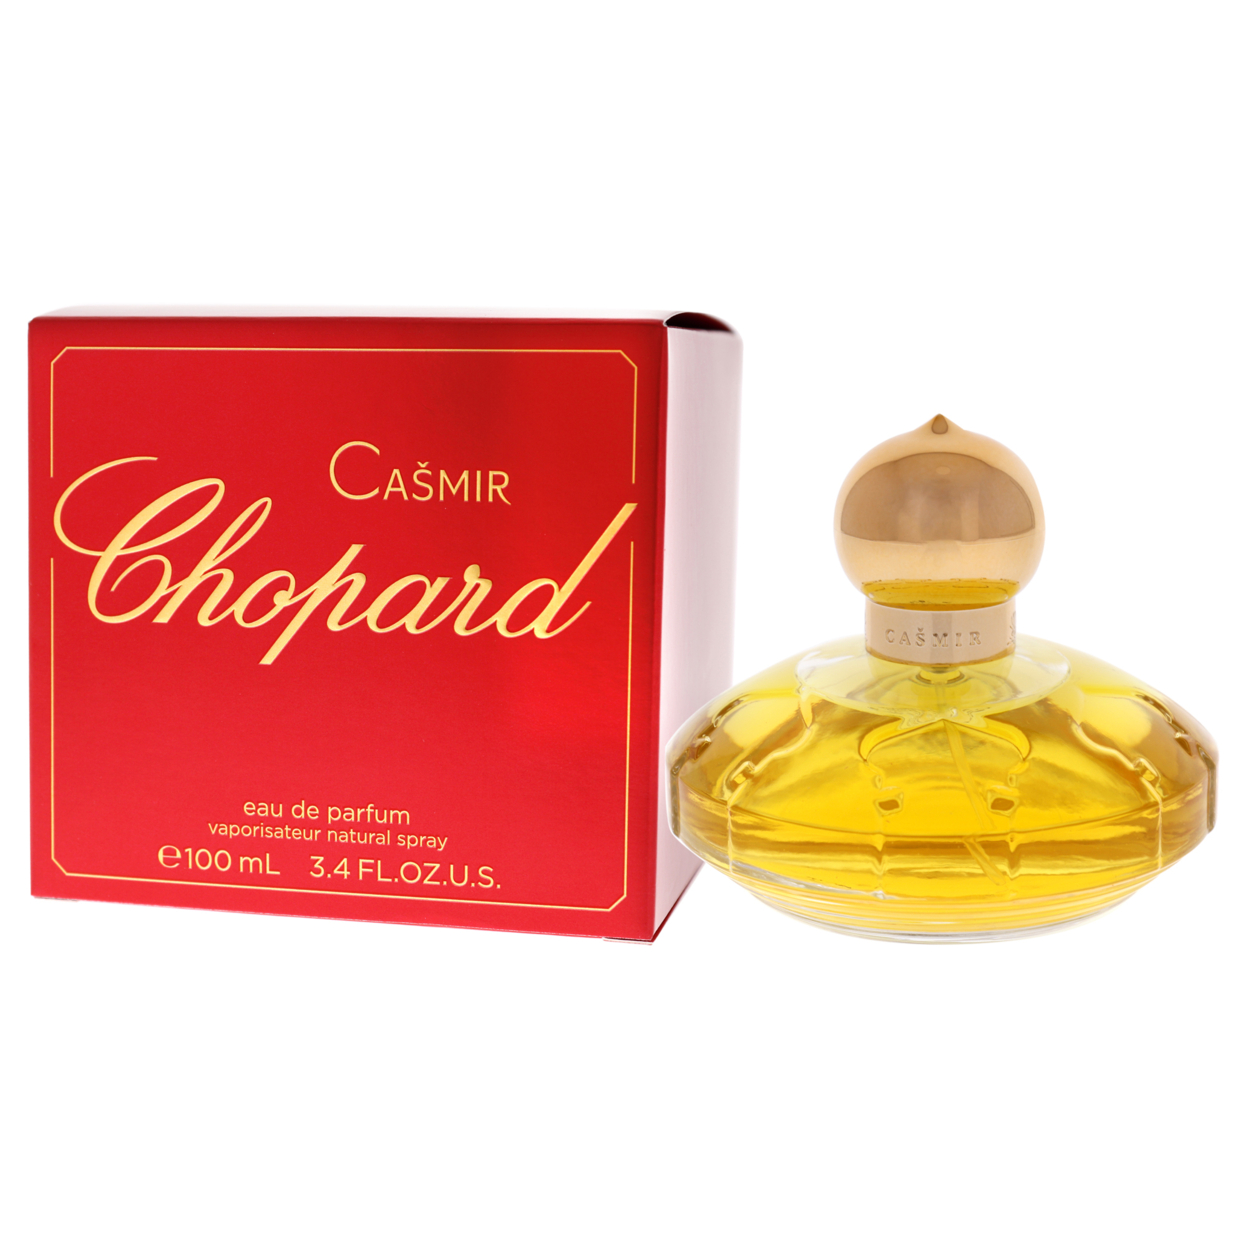 Chopard Casmir Eau de Parfum, Perfume for Women, 3.4 Oz - image 4 of 6